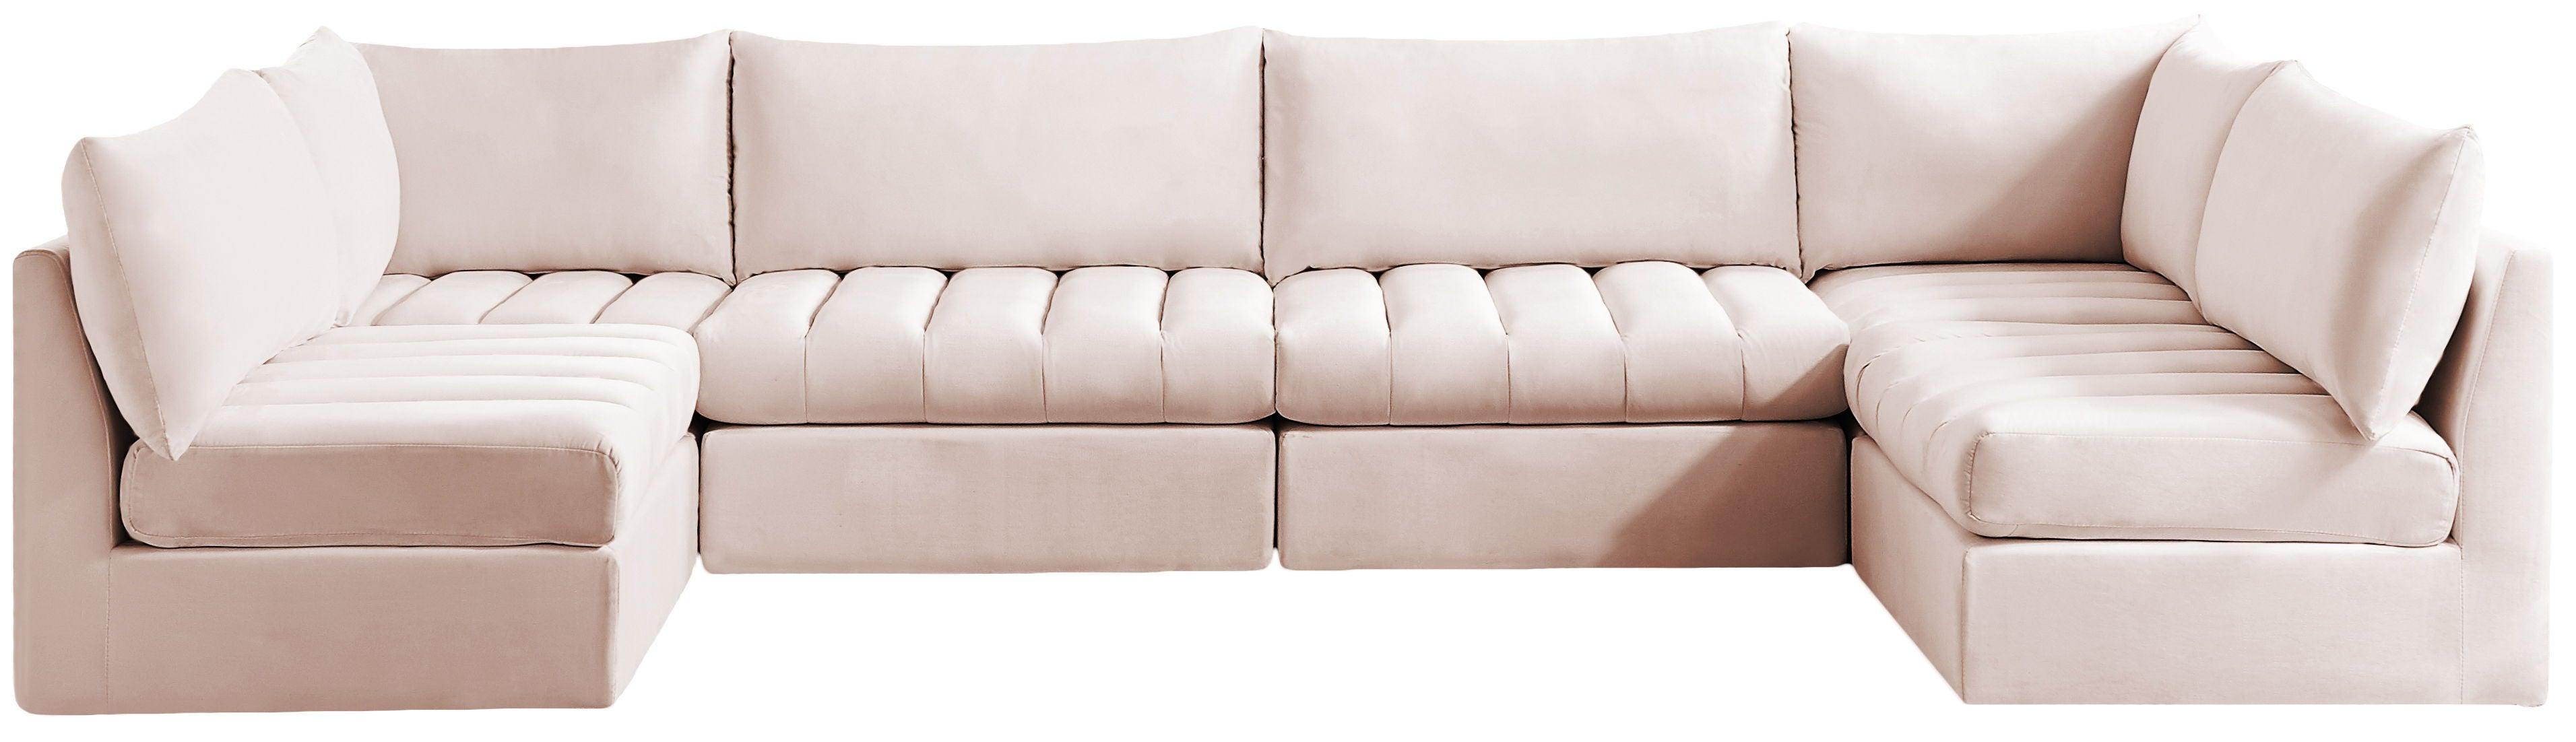 Meridian Furniture - Jacob - Modular Sectional 6 Piece - Pink - 5th Avenue Furniture